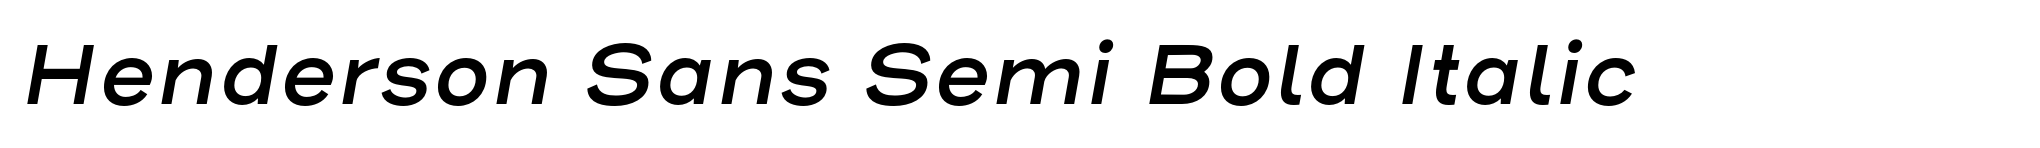 Henderson Sans Semi Bold Italic image